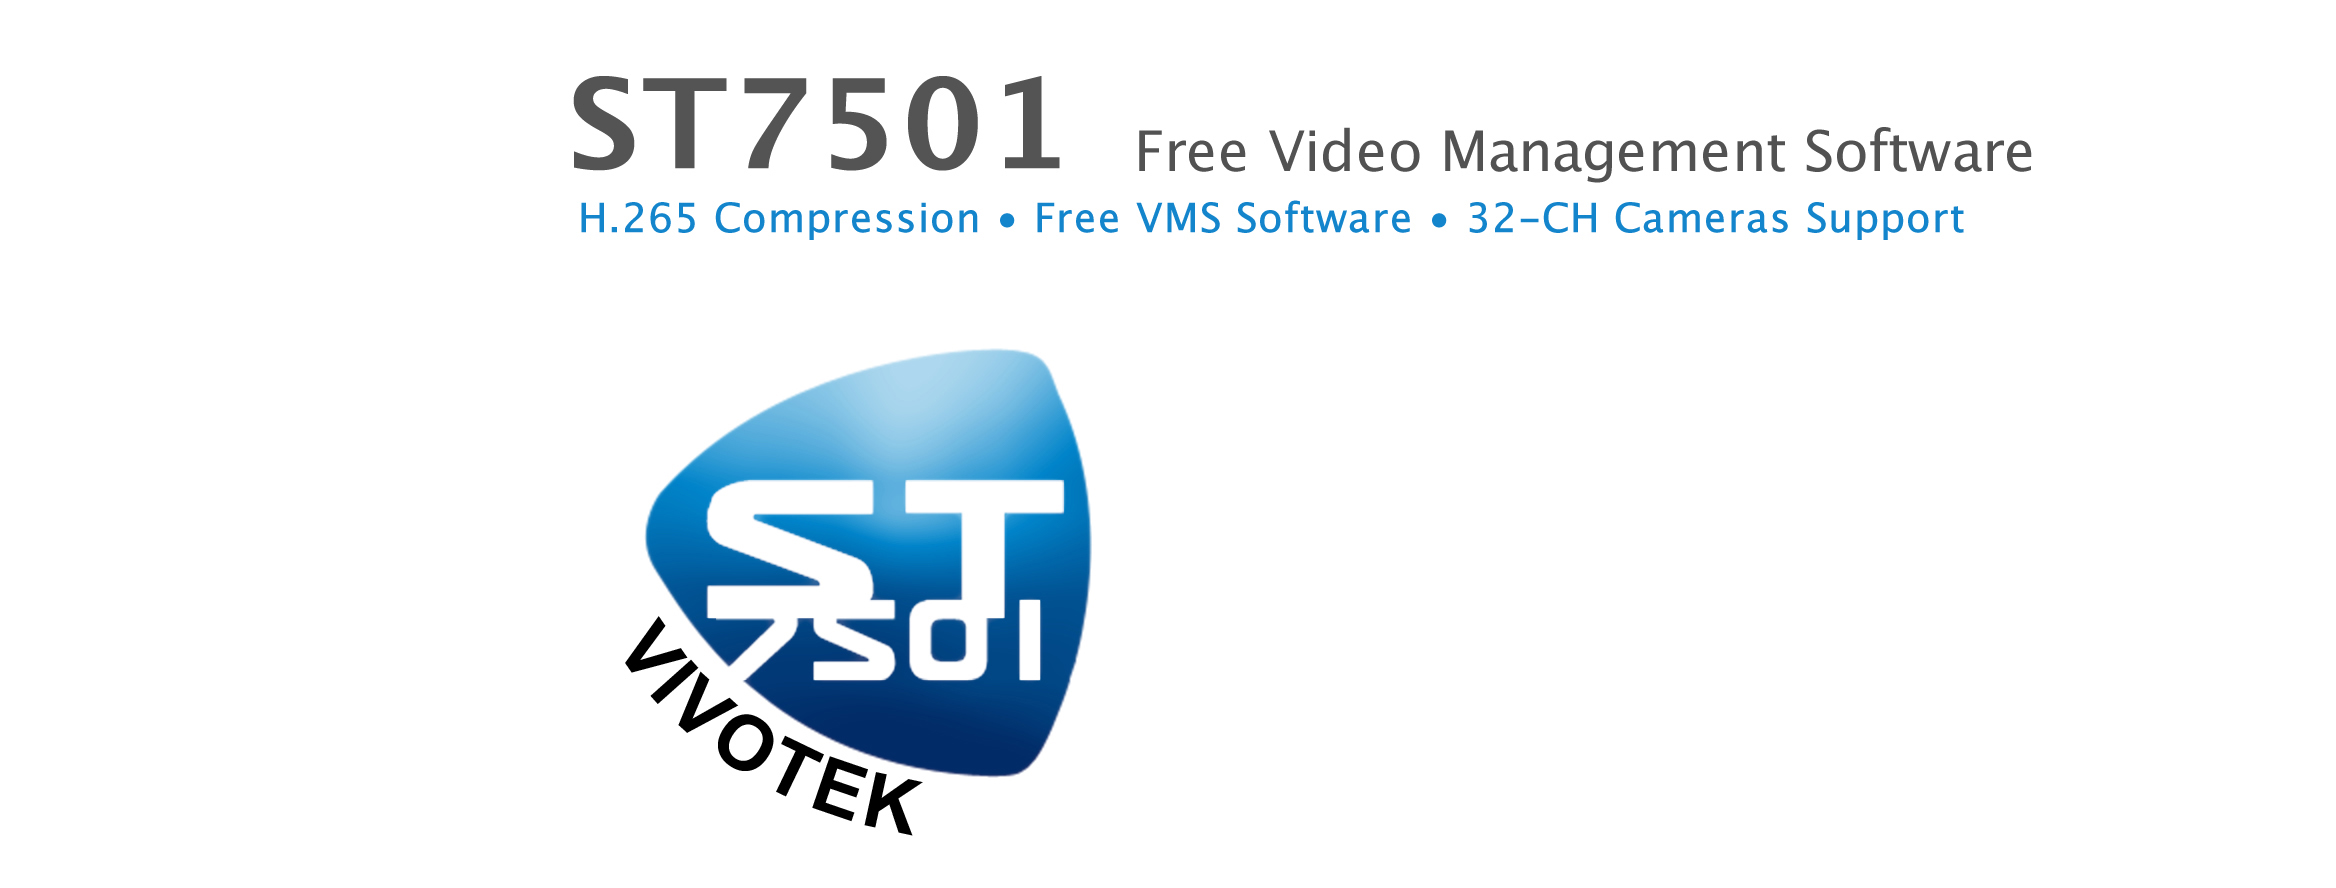 VIVOTEK Free Video Management Software 